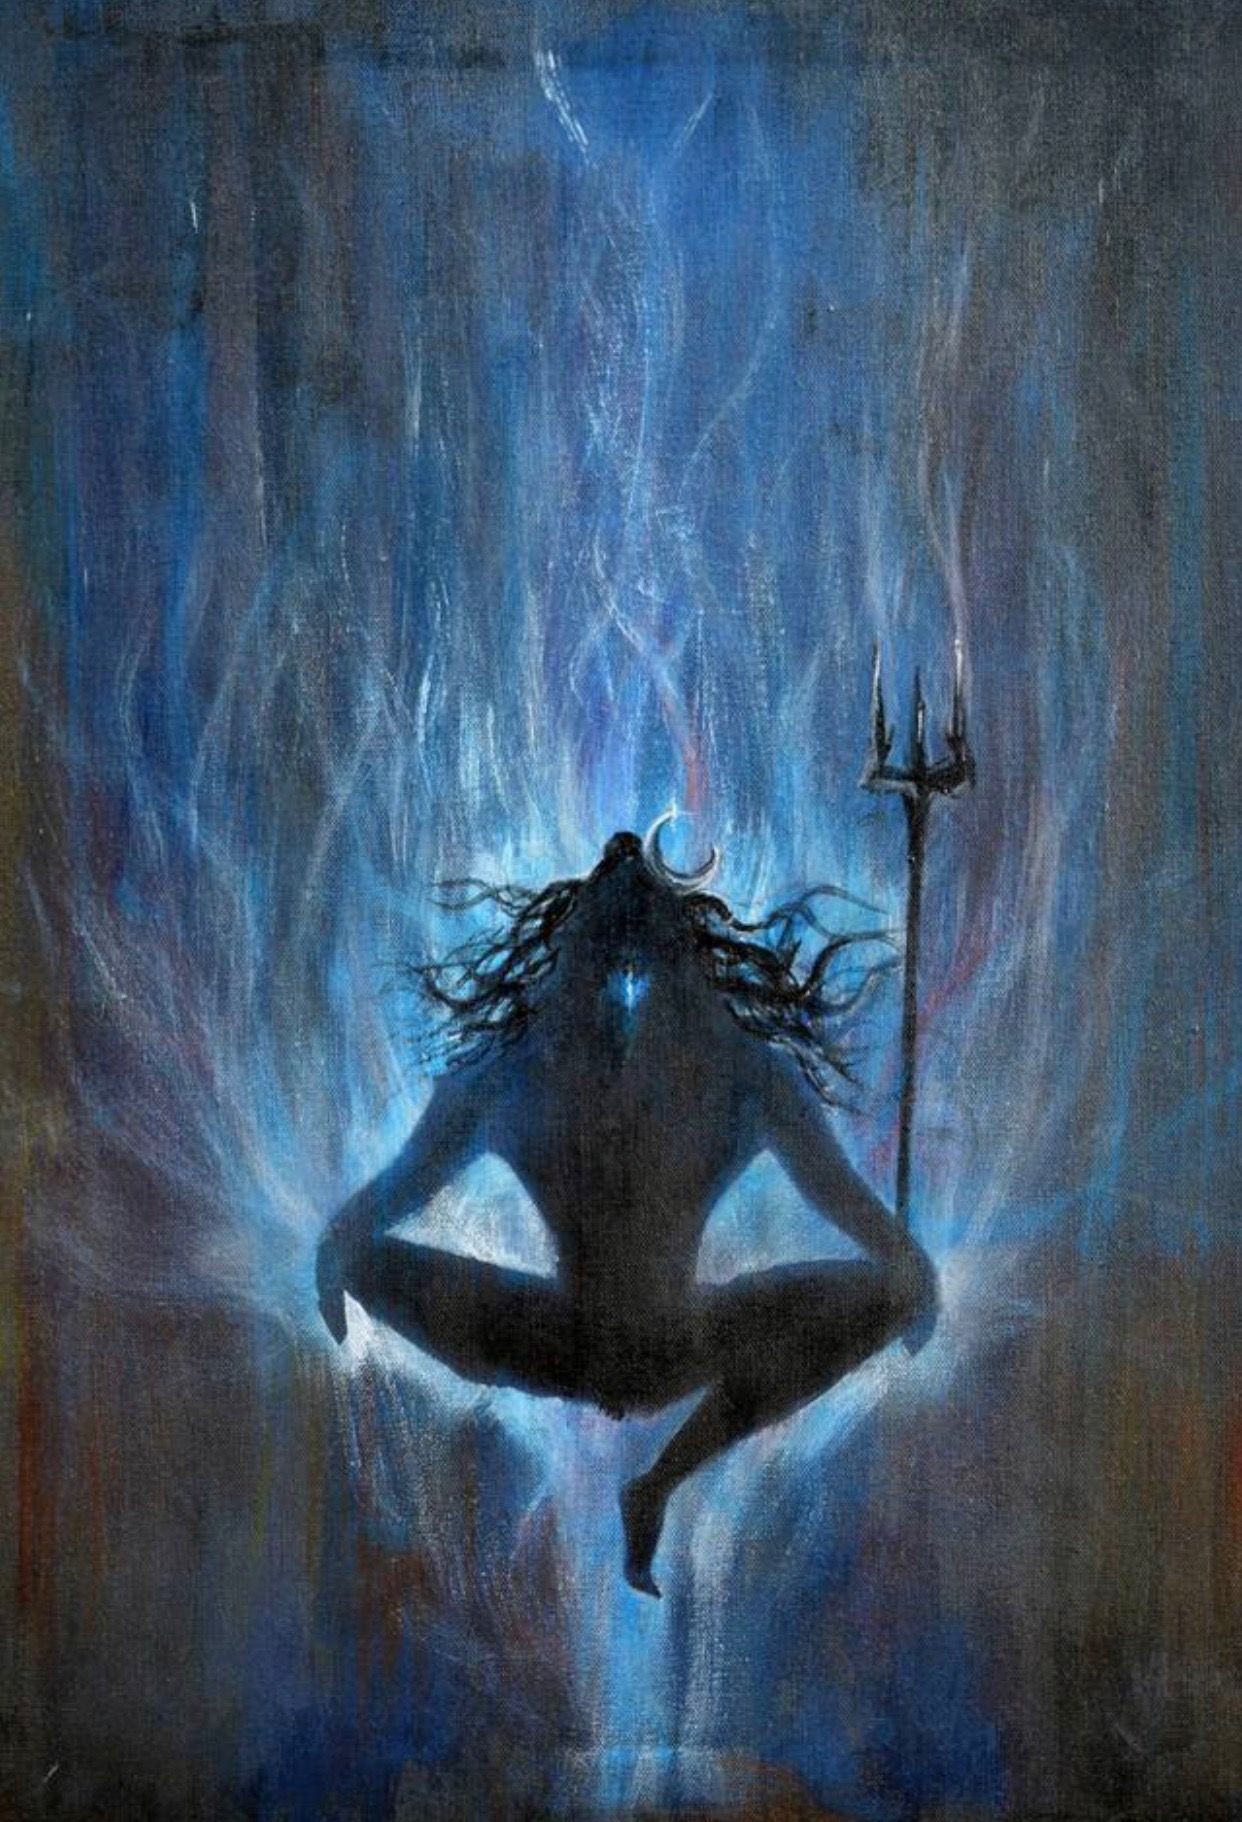 Shiva Meditating Wallpapers - Wallpaper Cave